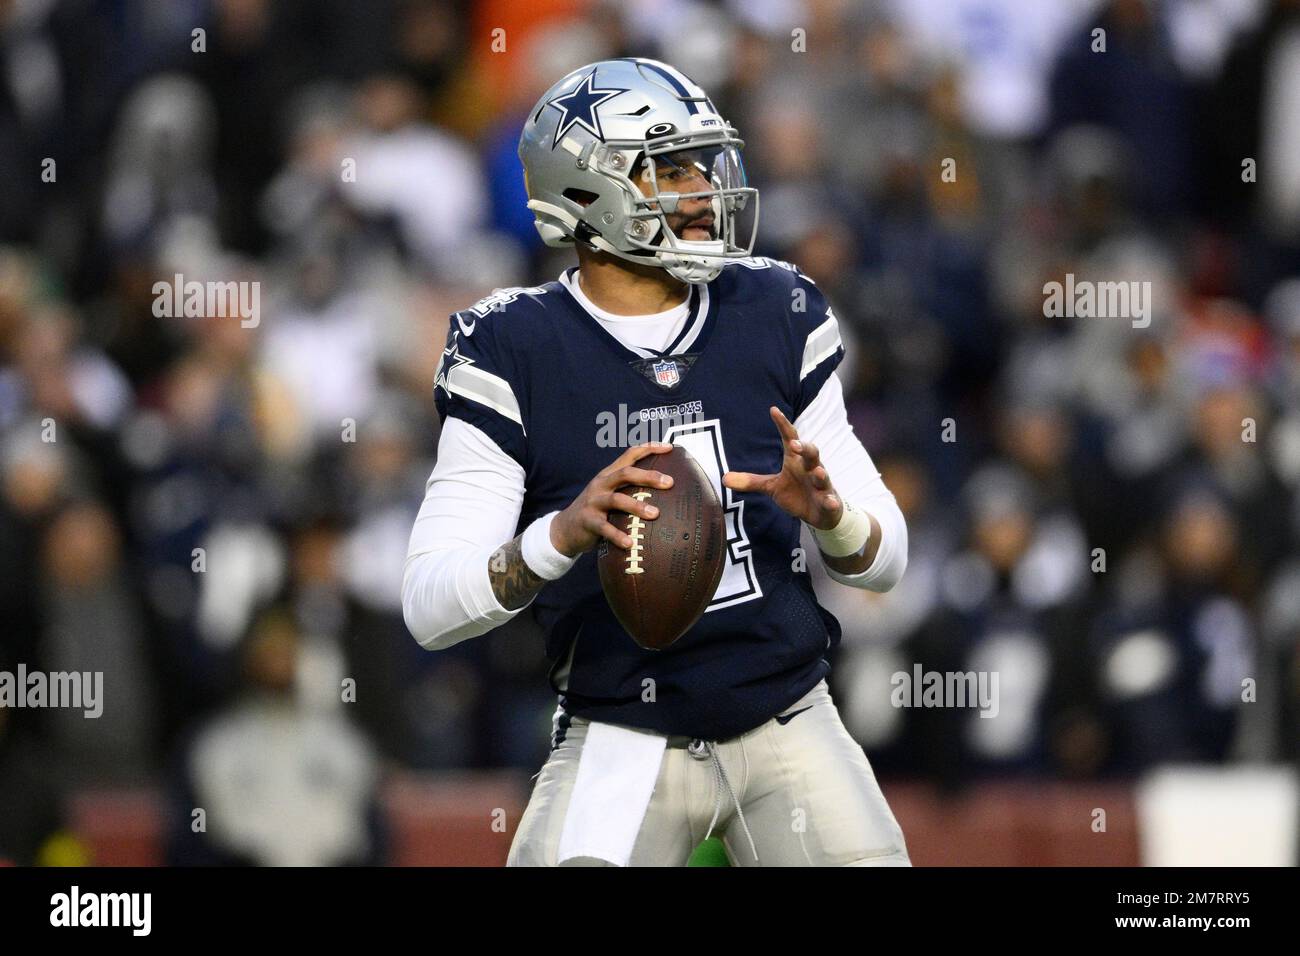 Dallas Cowboys quarterback Dak Prescott (4) in action during the